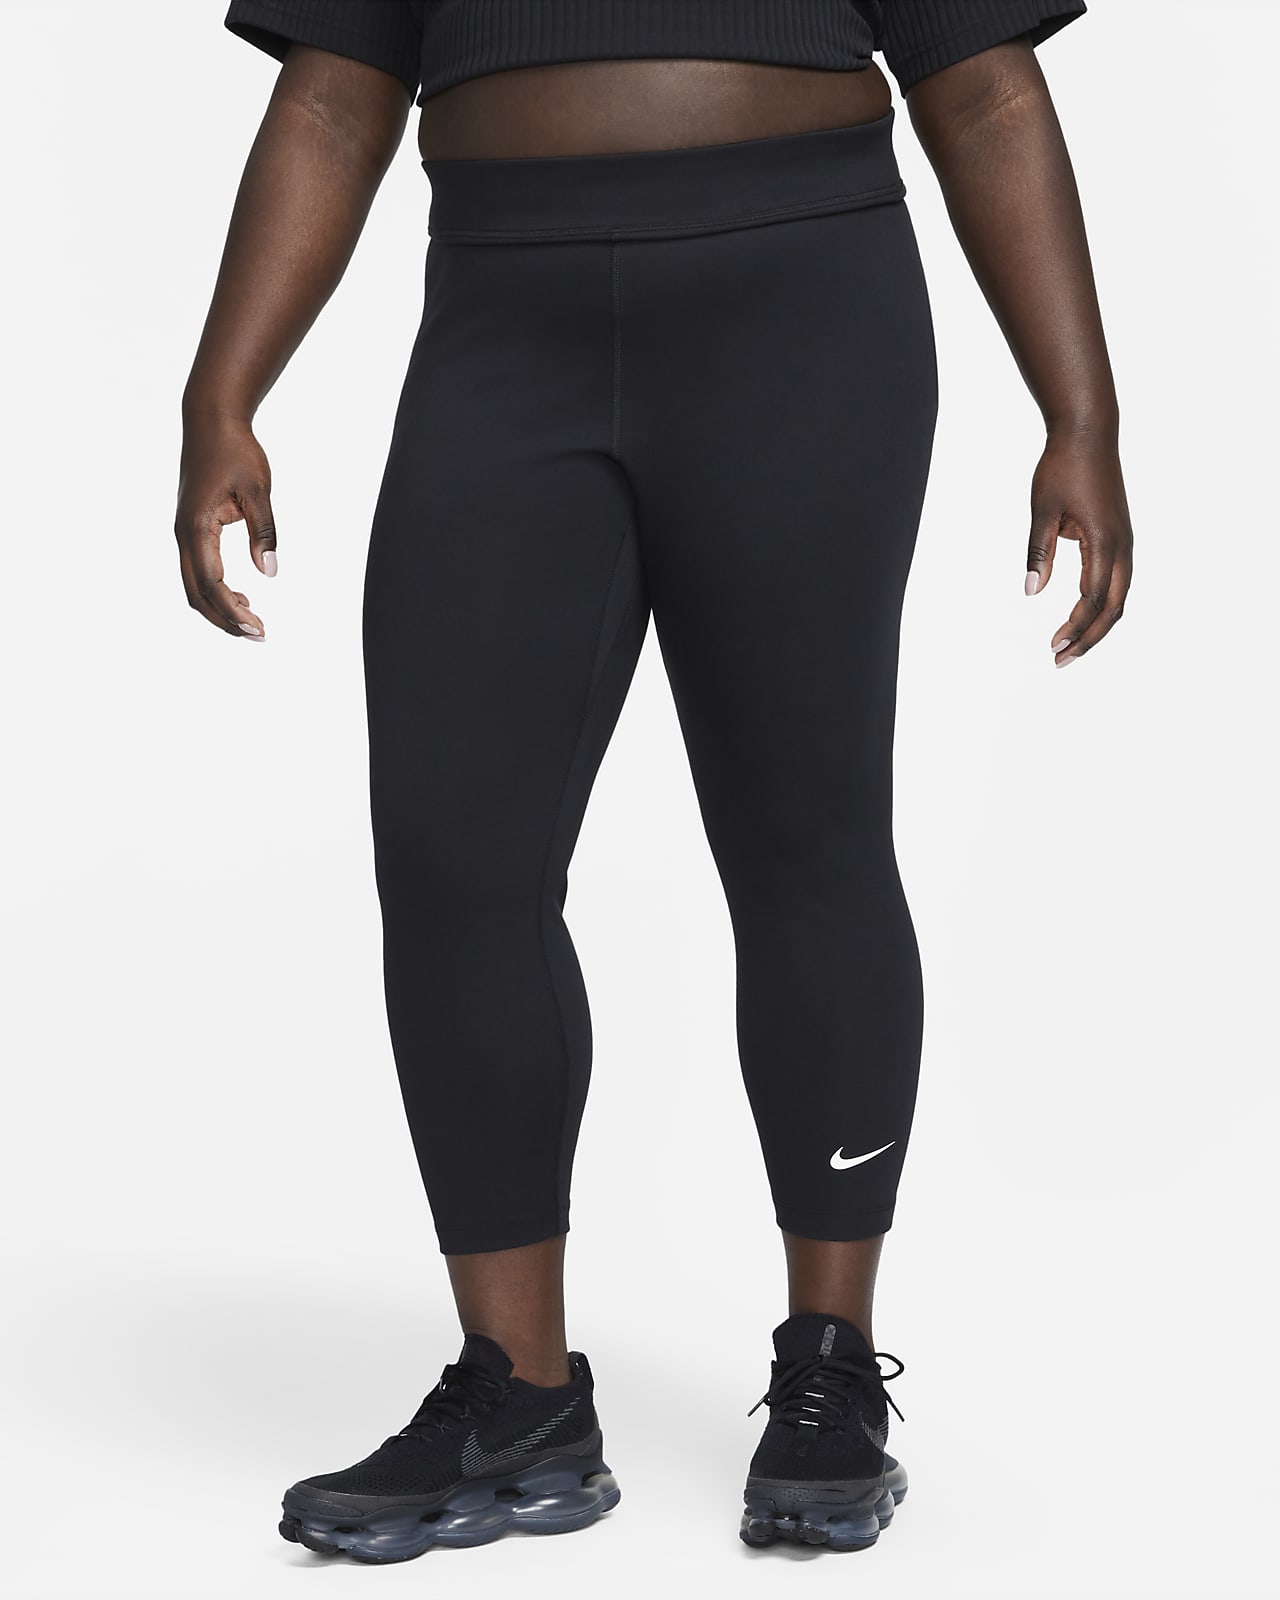 Nike Sportswear Classic magas derekú, 7/8-os női leggings (plus size méret)